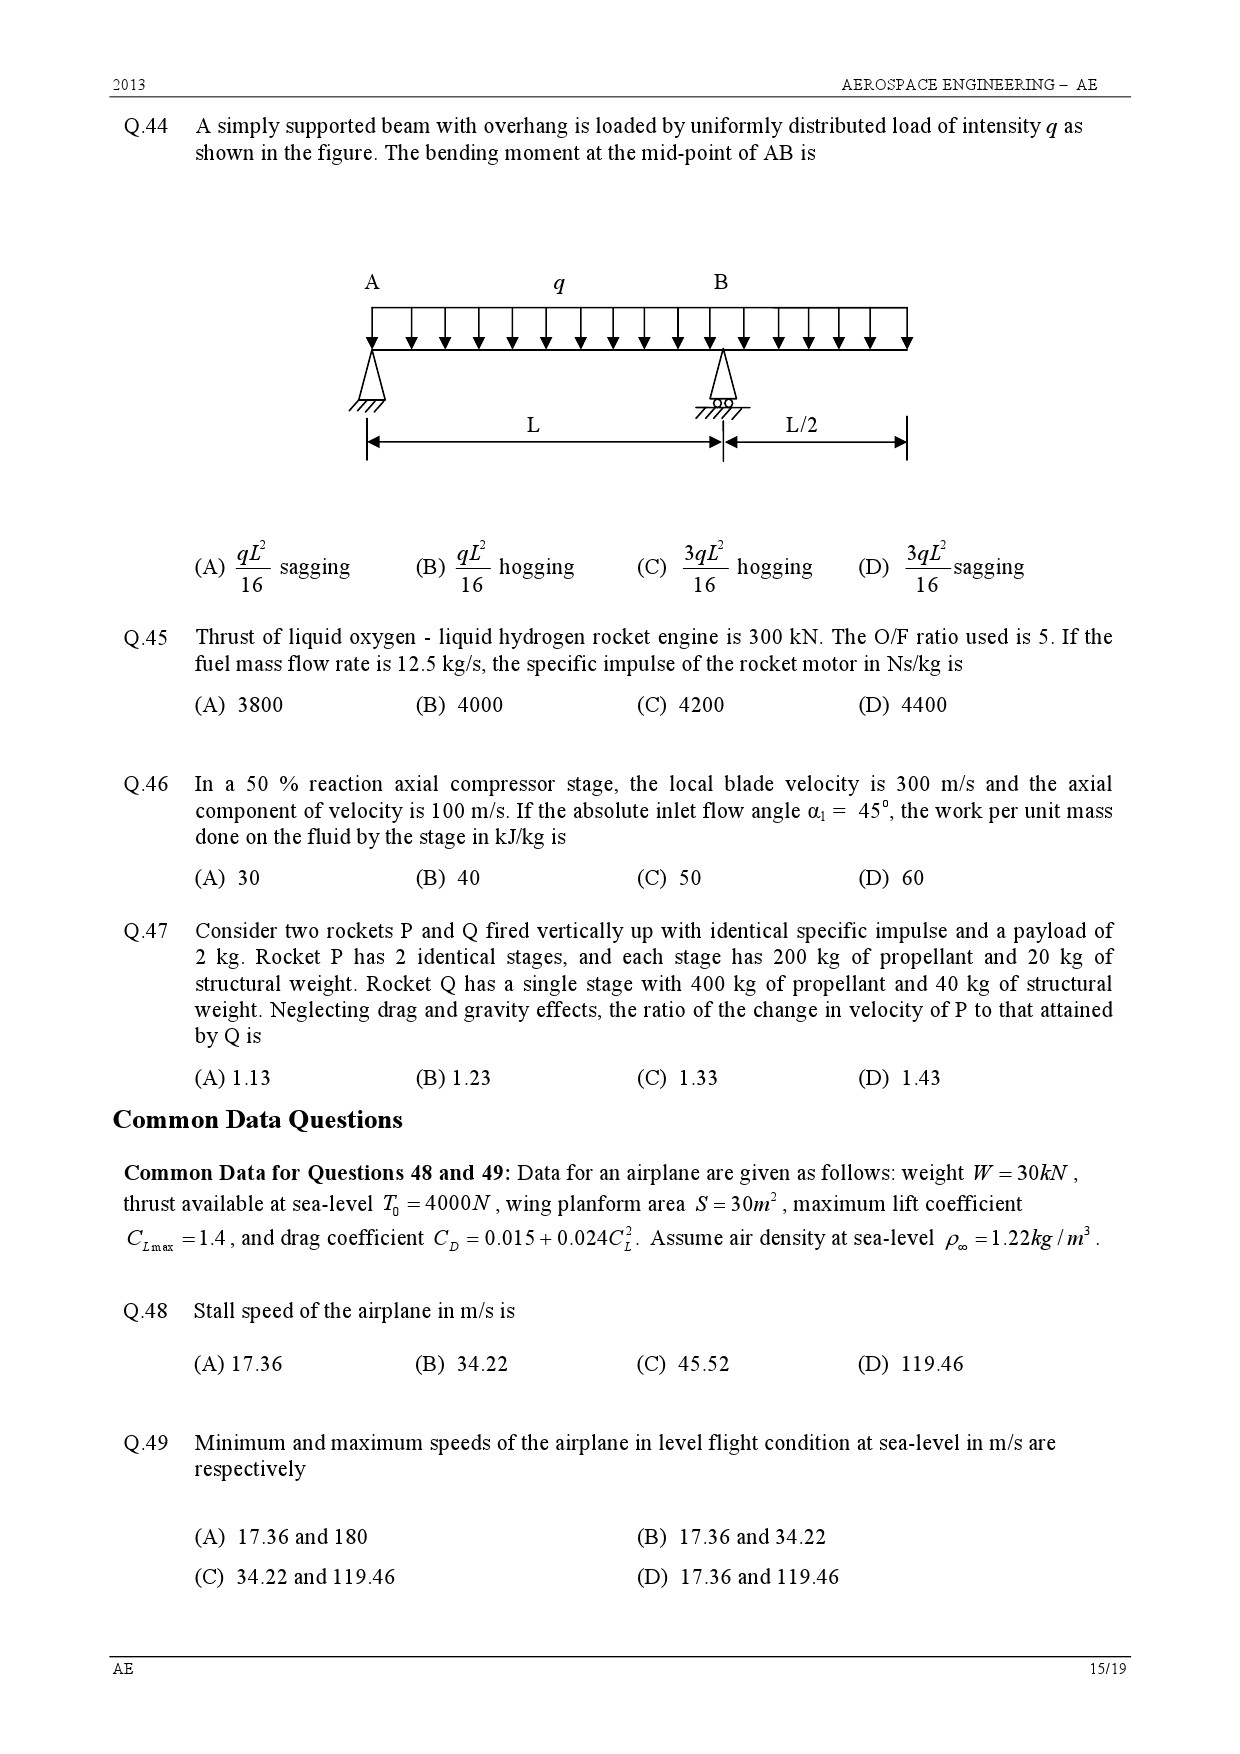 GATE Exam 2013 Aerospace Engineering Question Paper 15